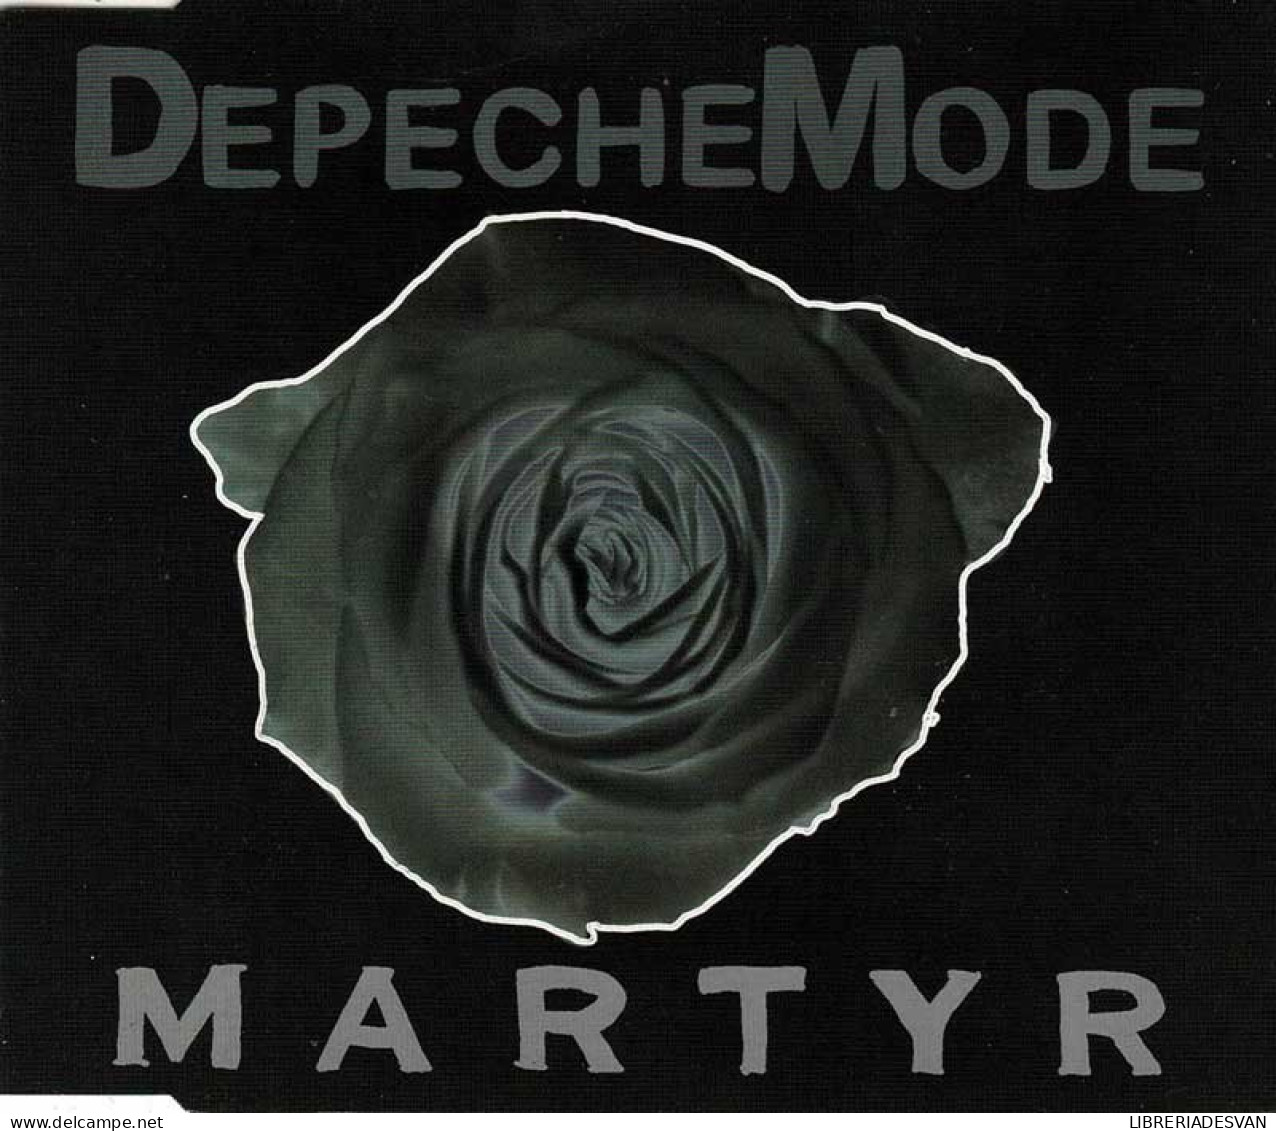 Depeche Mode - Martyr. CD Single - Disco, Pop